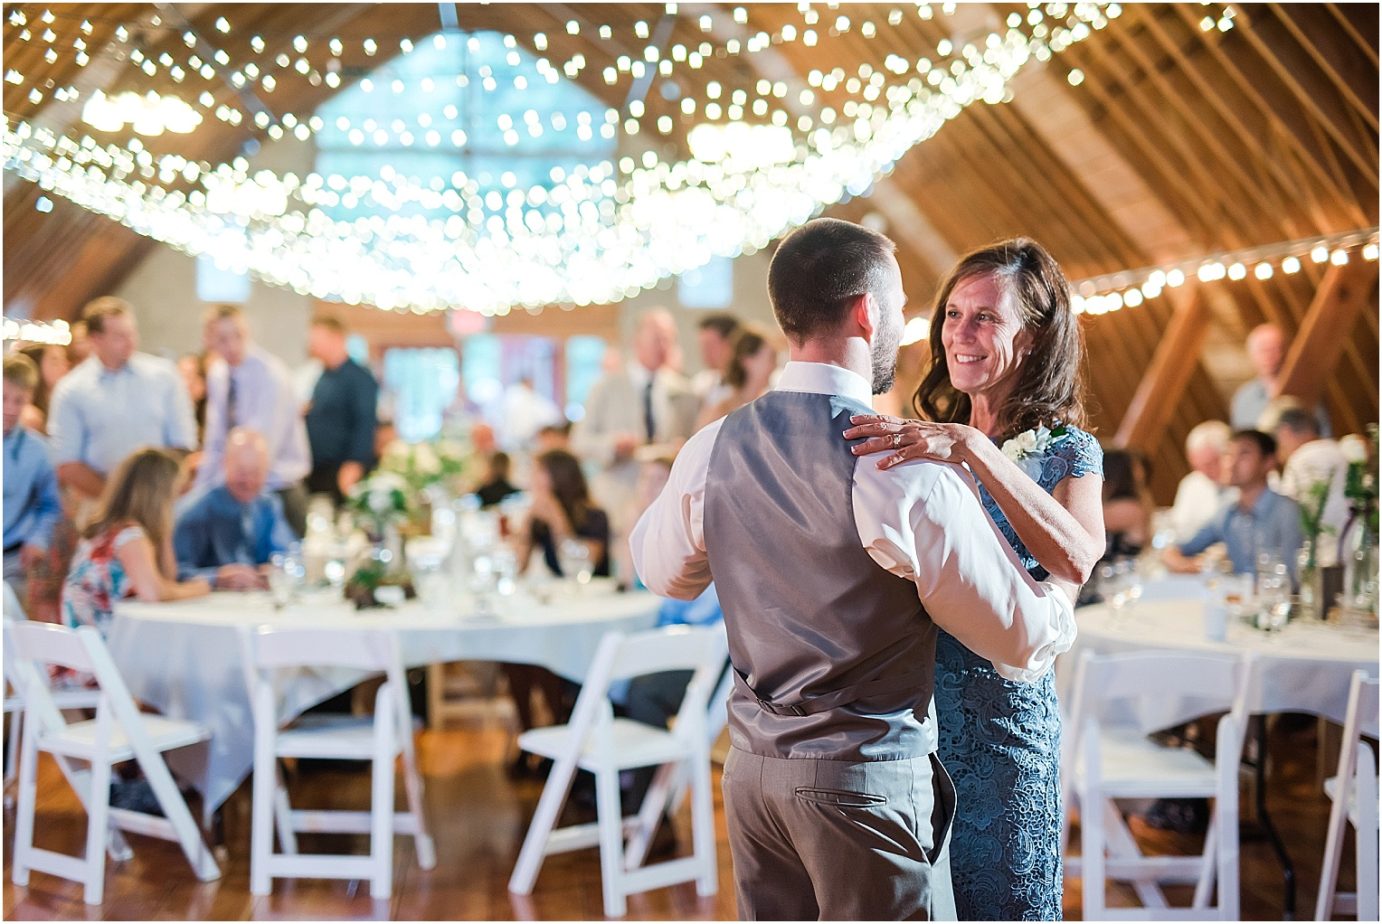 Pine River Ranch Wedding Leavenworth WA Matt and Kelsey dancing at reception